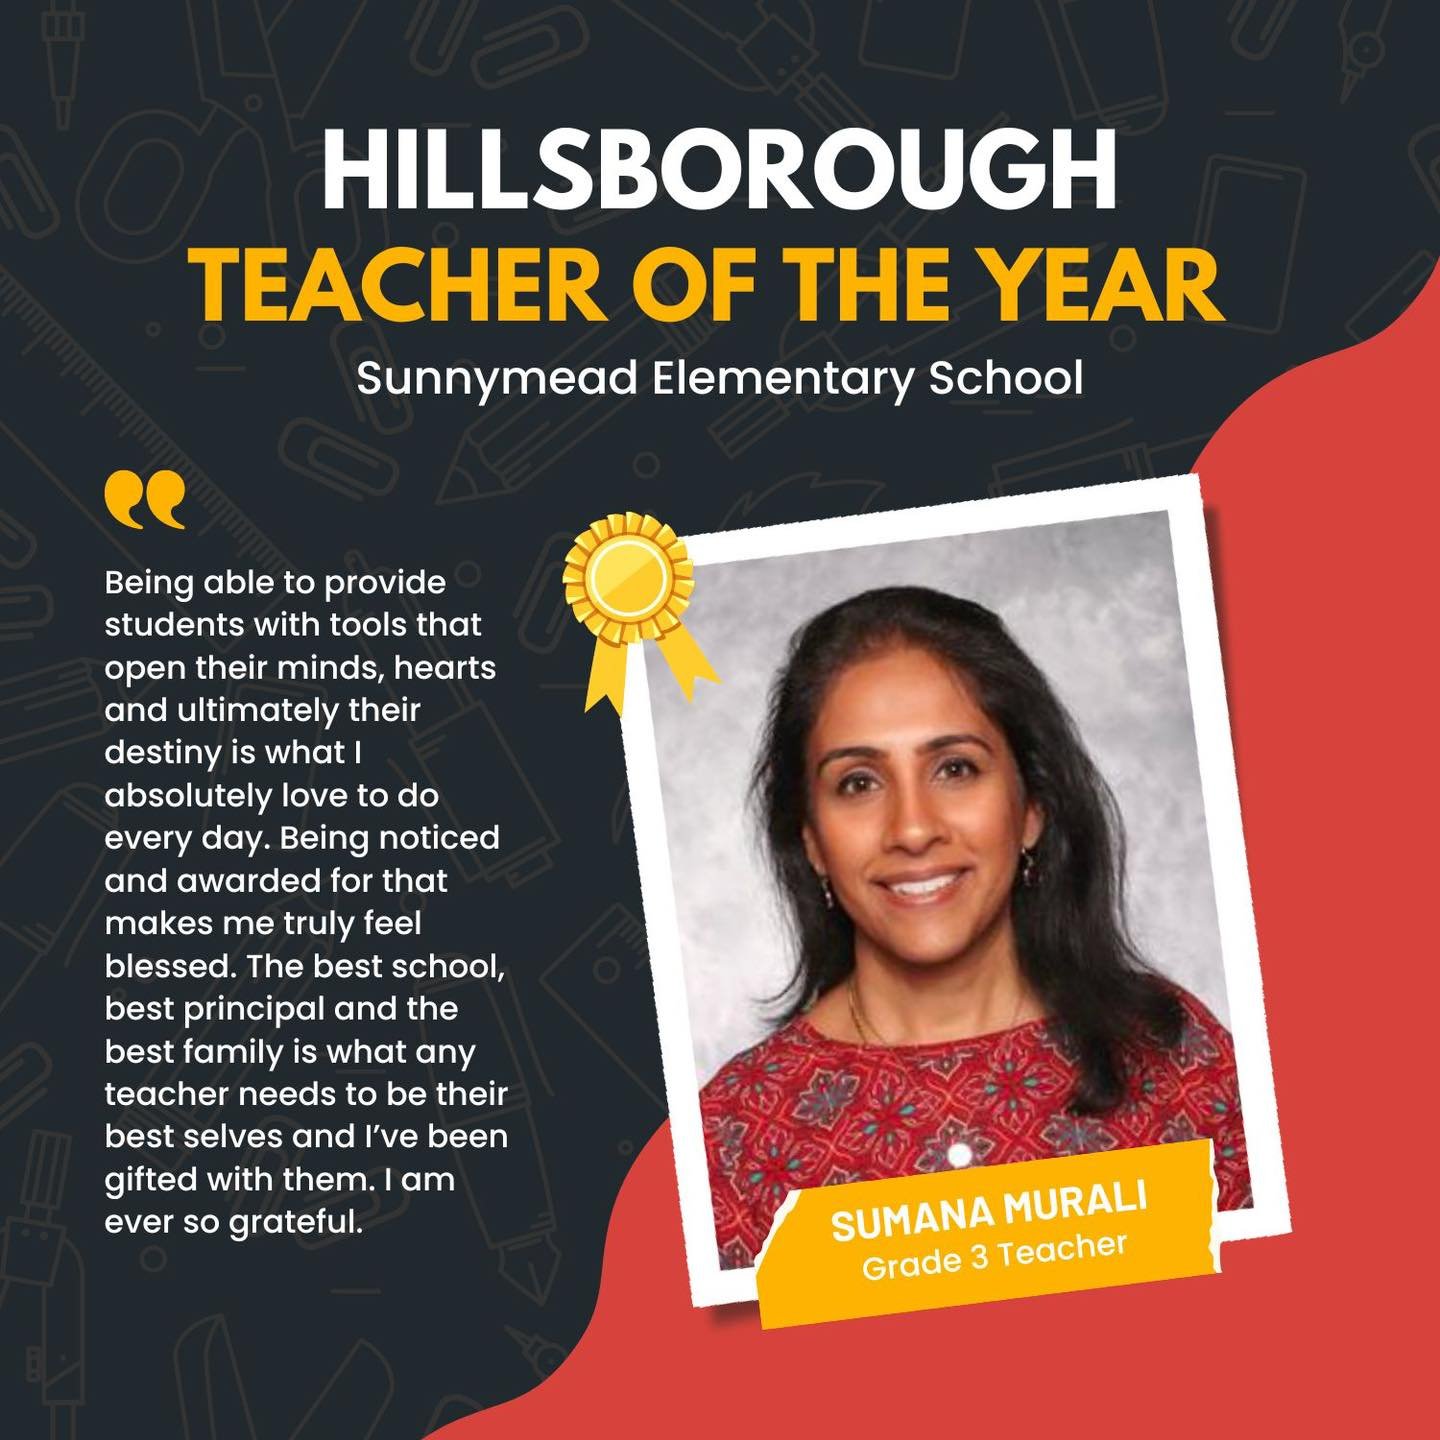 Congratulations to Sumana Murali,
Sunnymead Elementary School Teacher of the Year!